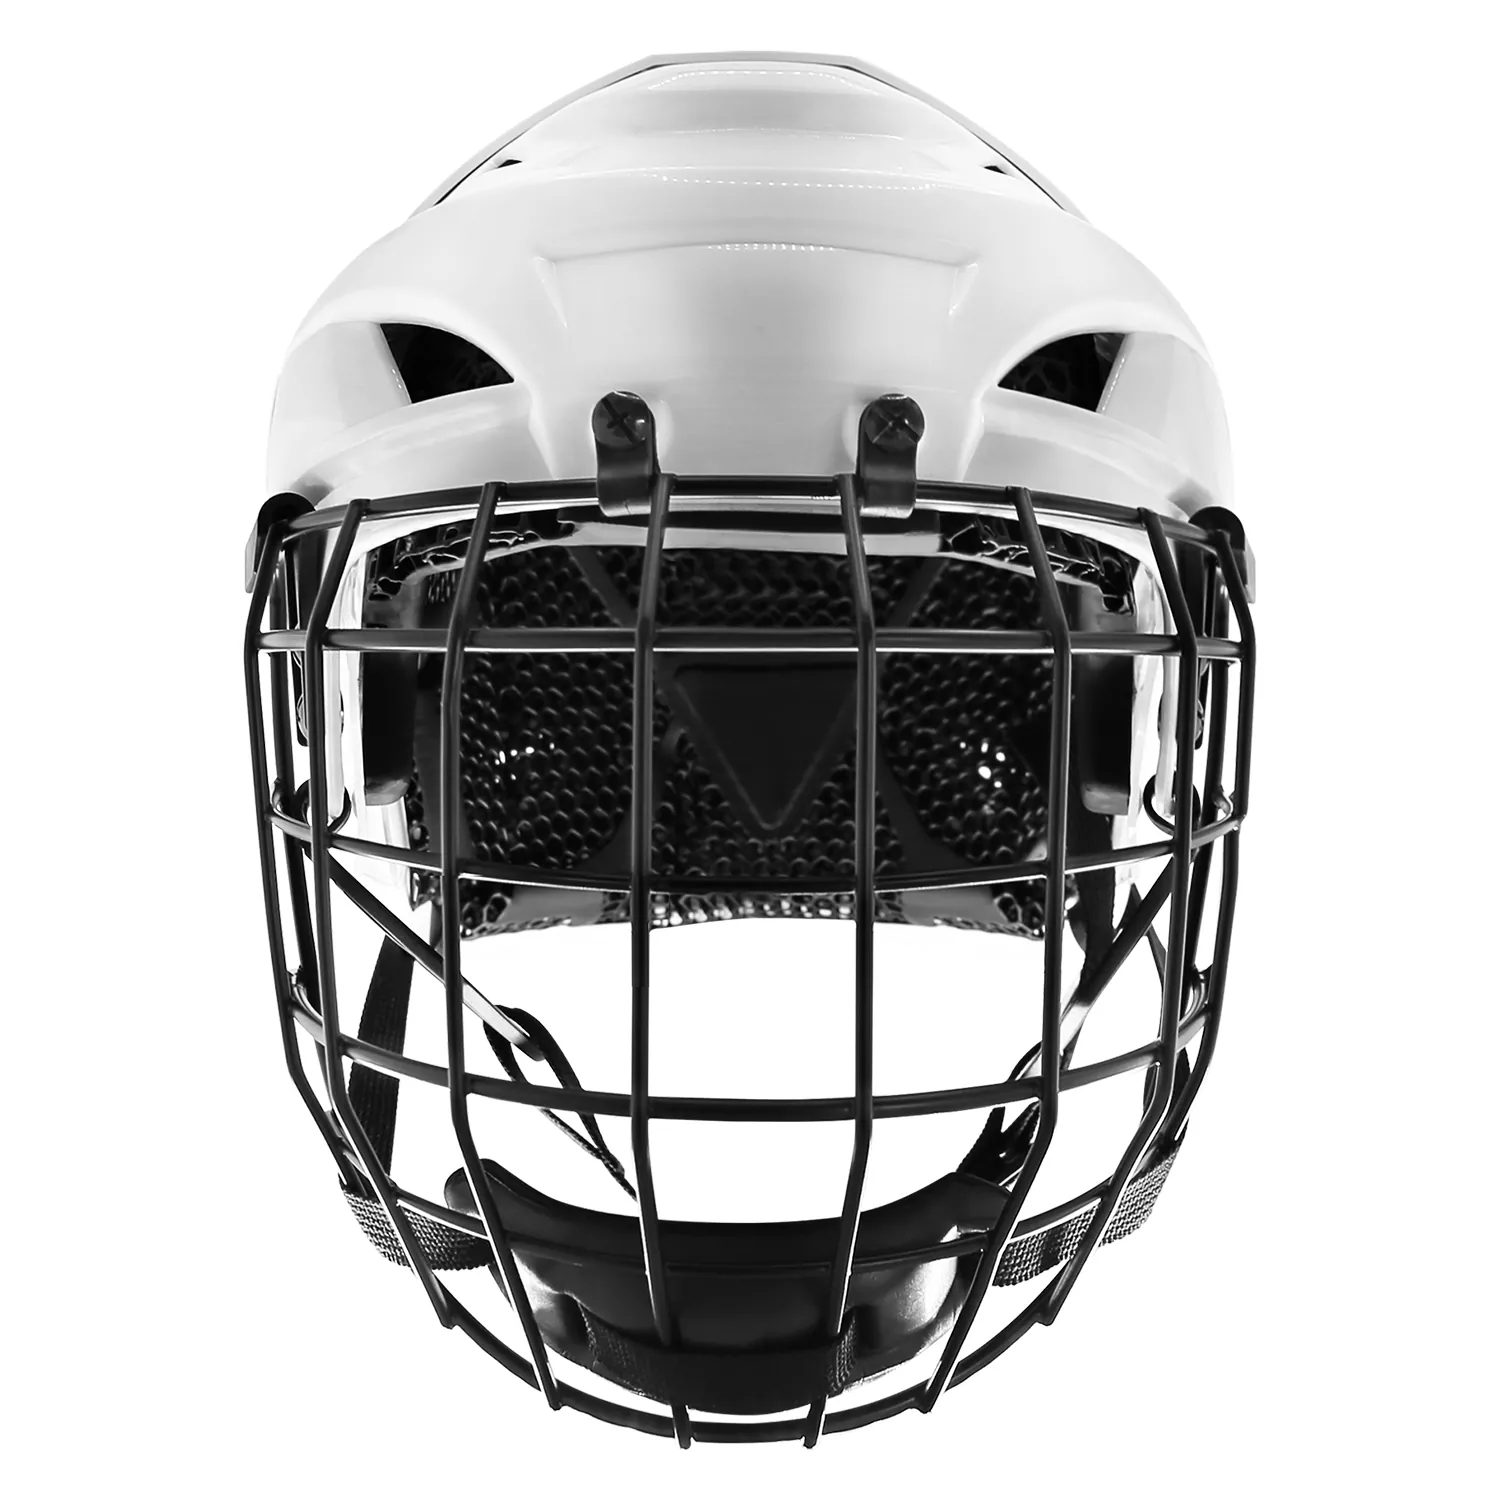 Advanced Ice Hockey Helmet with 3D Lattice Printing Liner